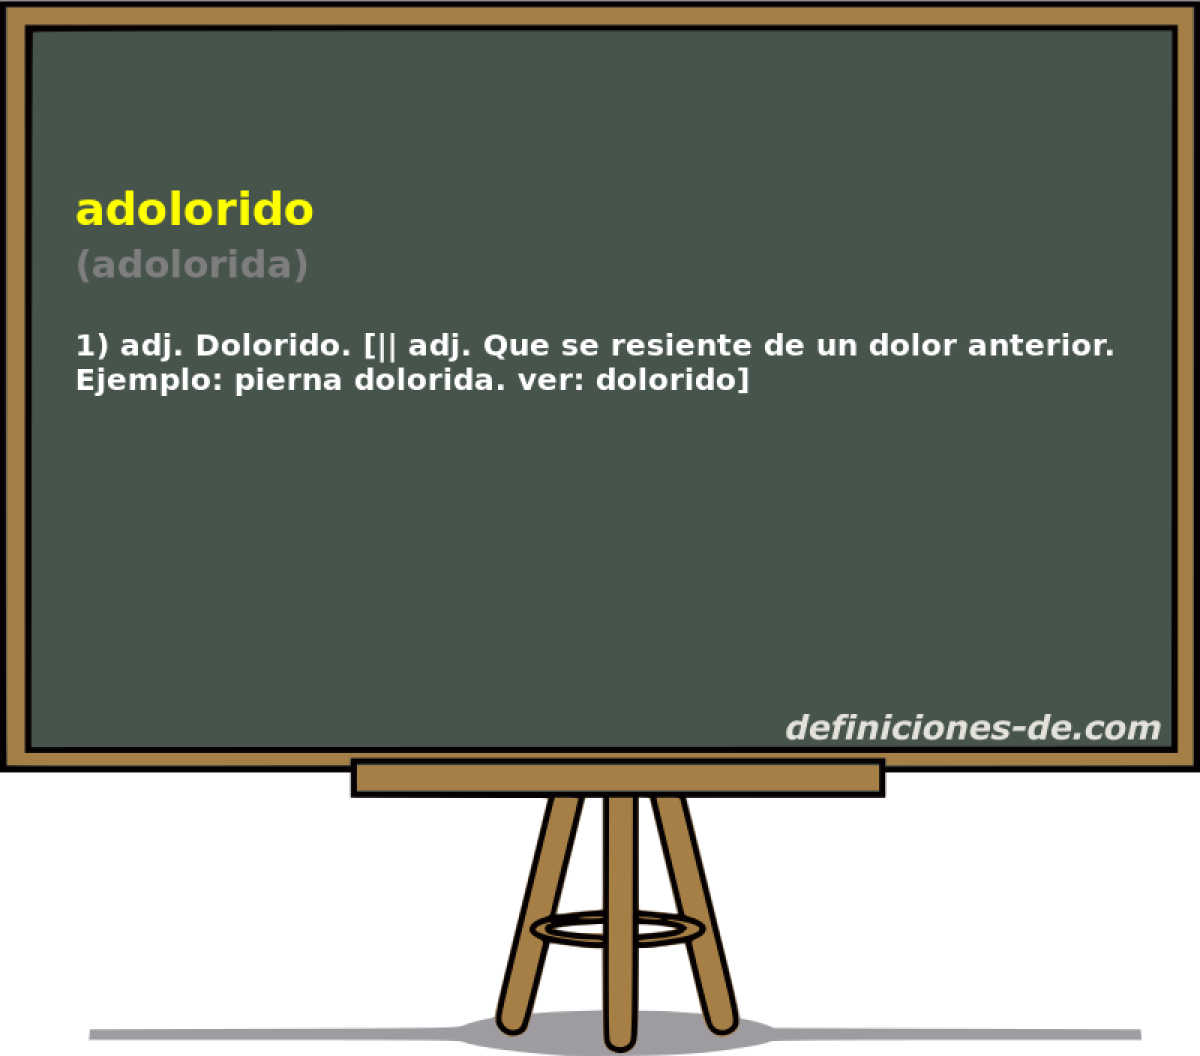 adolorido (adolorida)